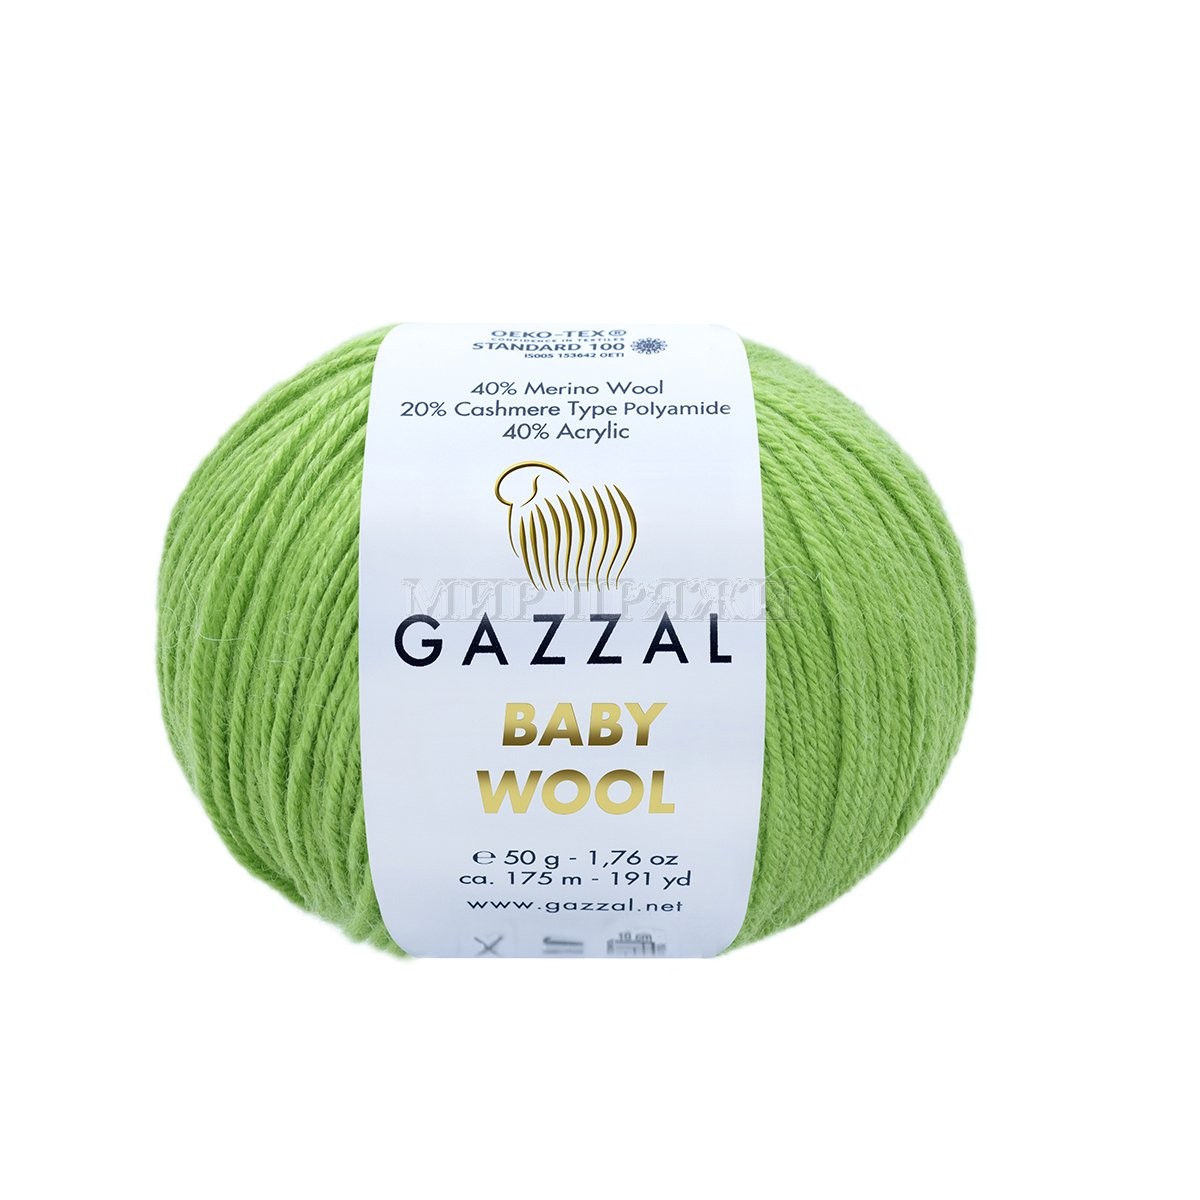 Пряжа Gazzal Baby wool gazzal (Турция)